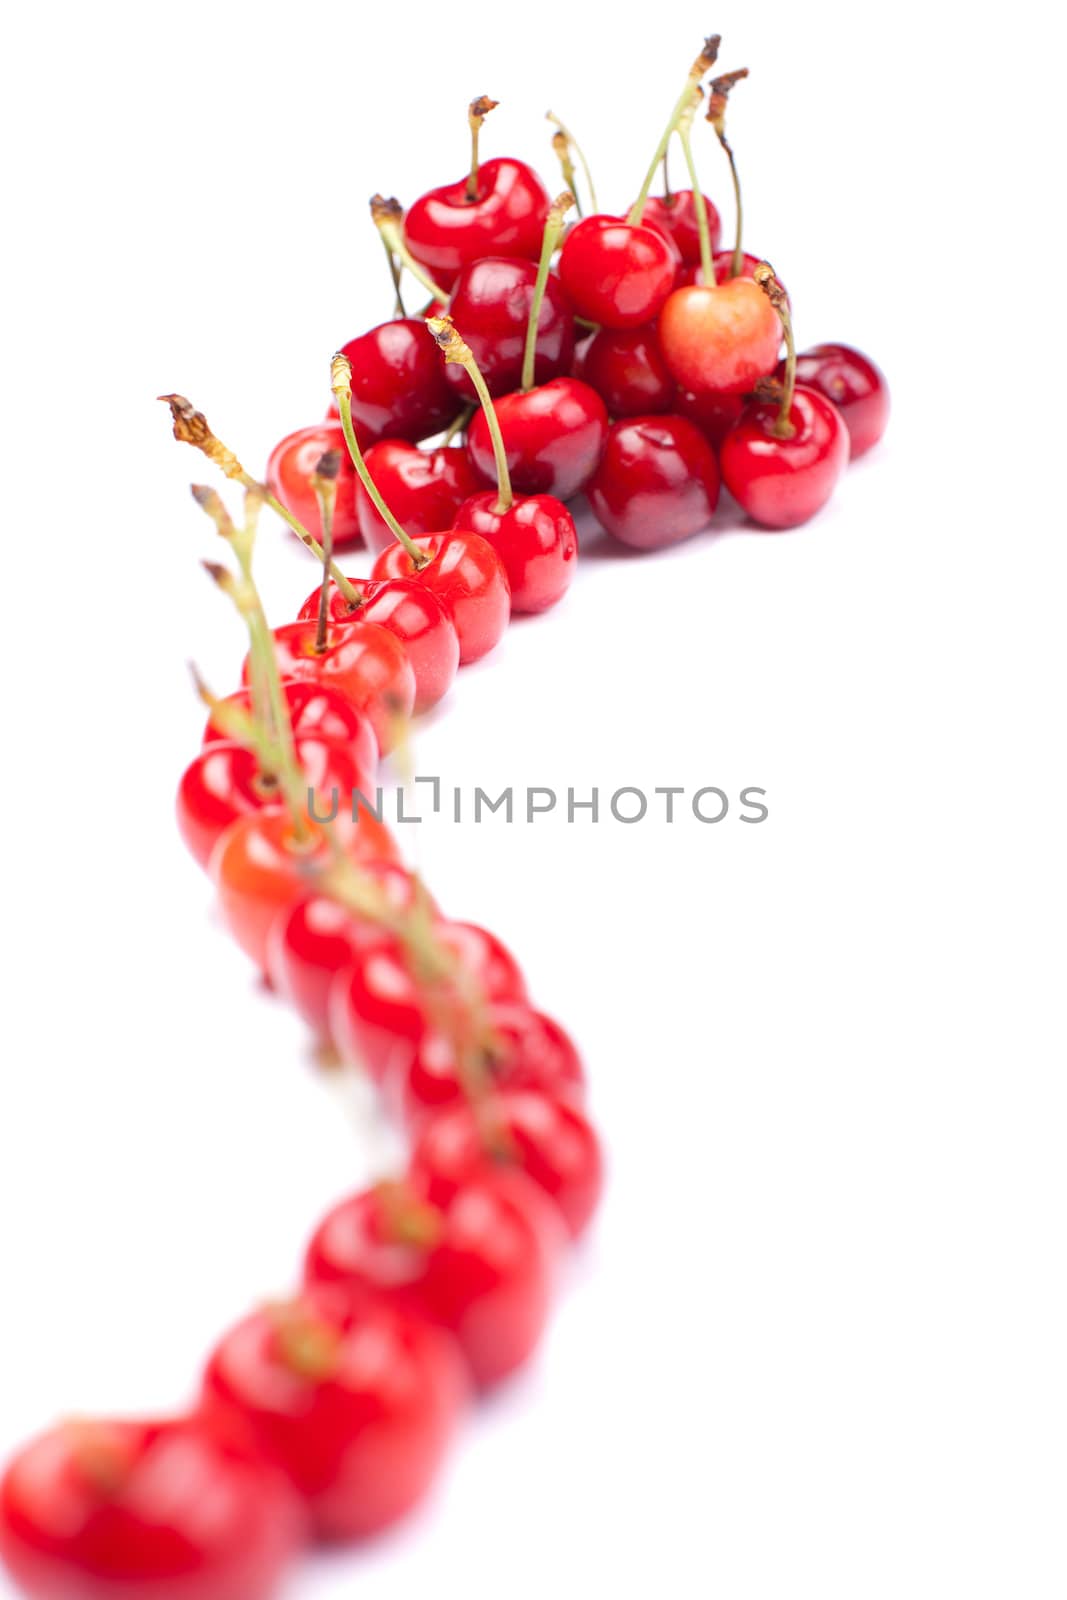 delicious cherries on white background